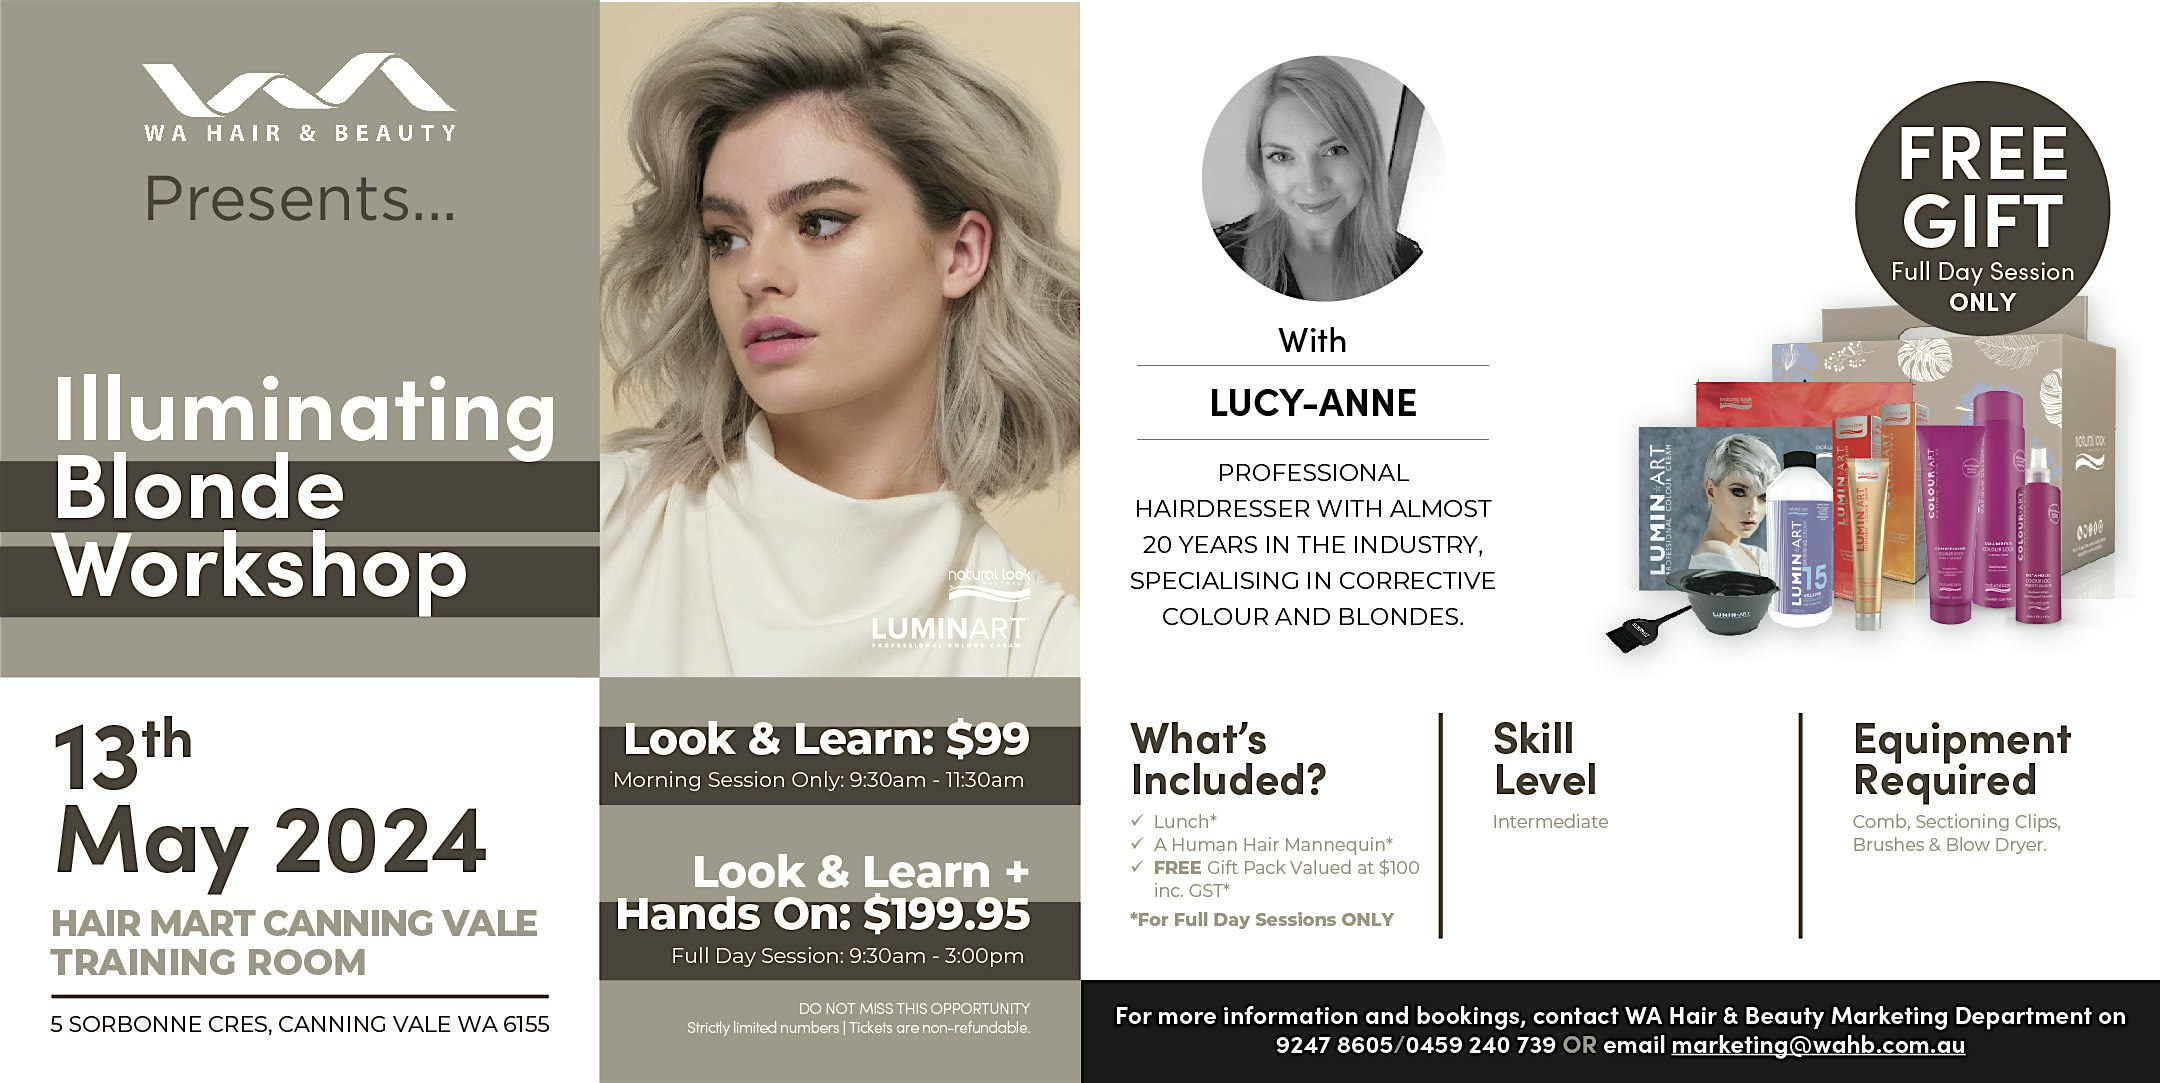 Illuminating Blonde Workshop – Look & Learn